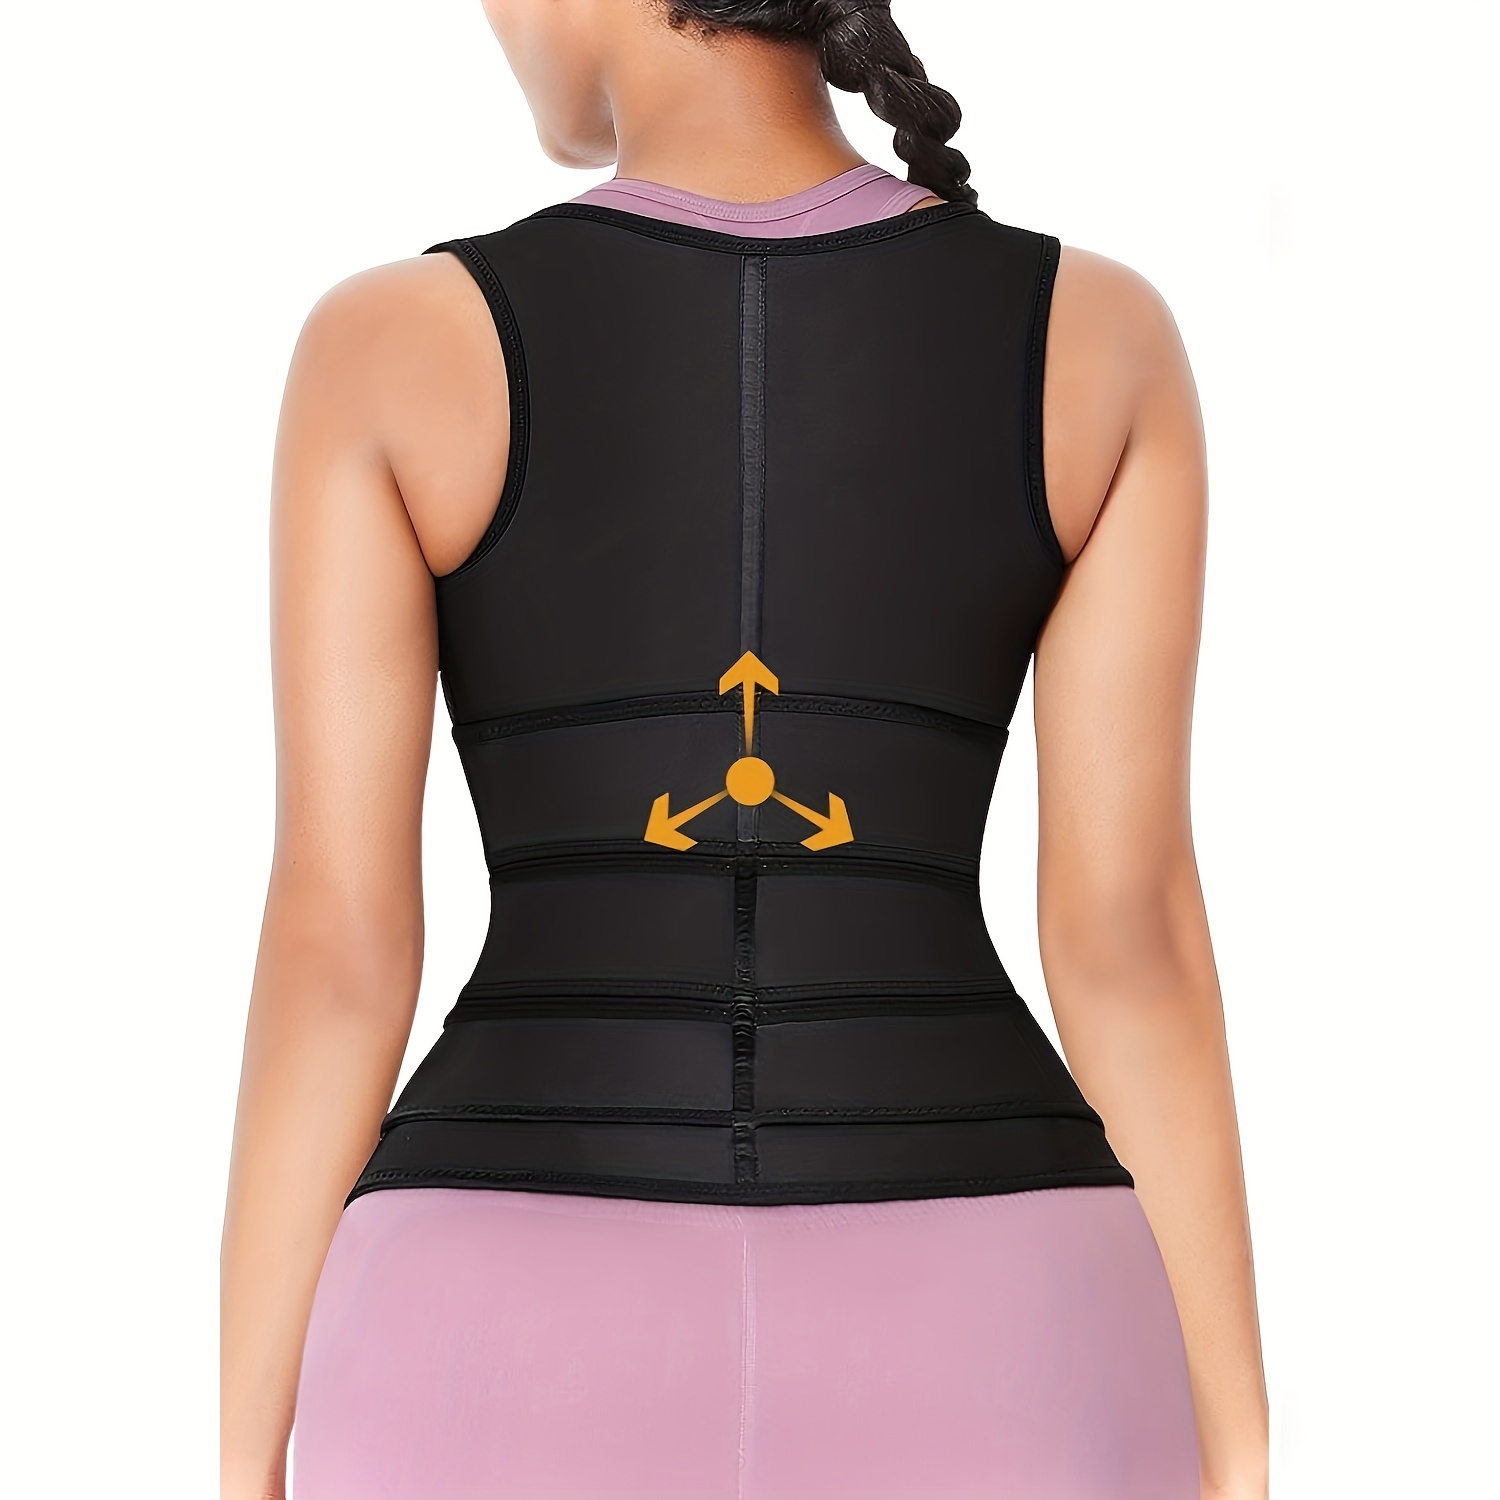 Body Wrap Shapewear Fashion Women Waist Trainer Corset Zipper Vest Body  Shaper Cincher Tank Top With Adjustable Straps @ Best Price Online